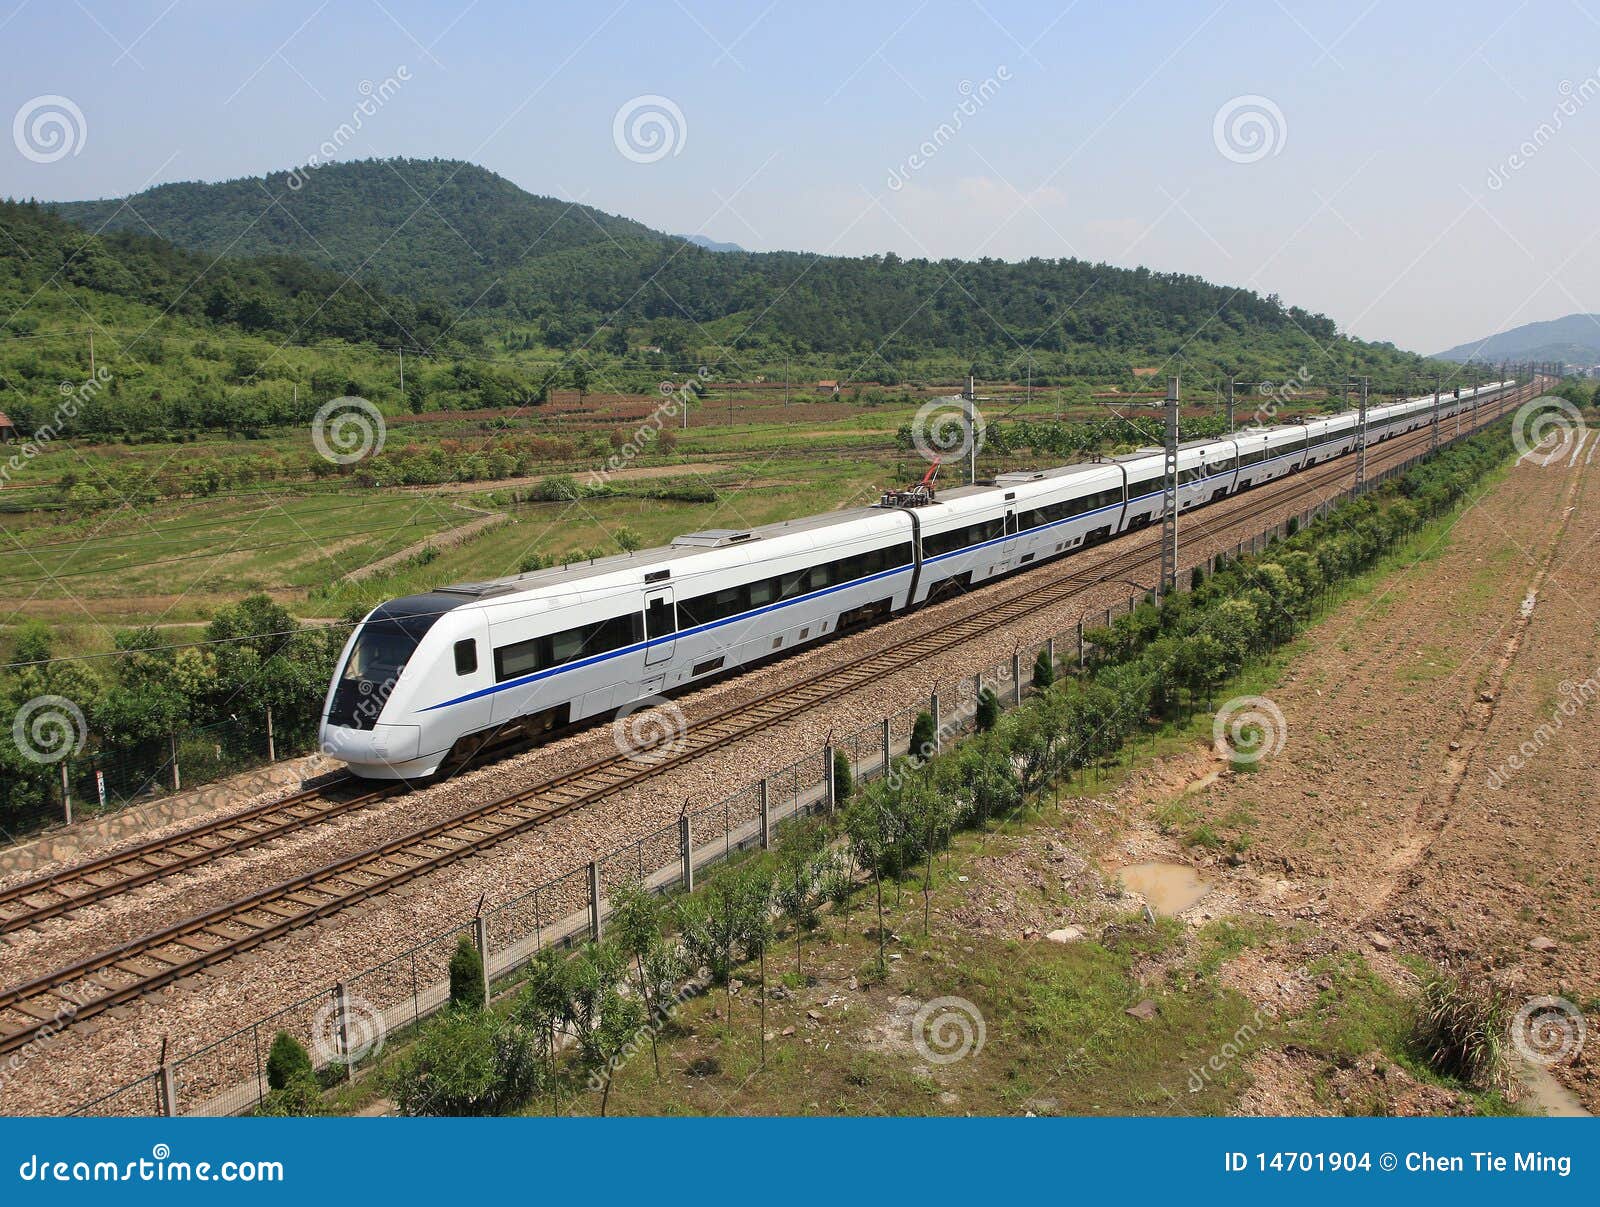 high-speed passenger train